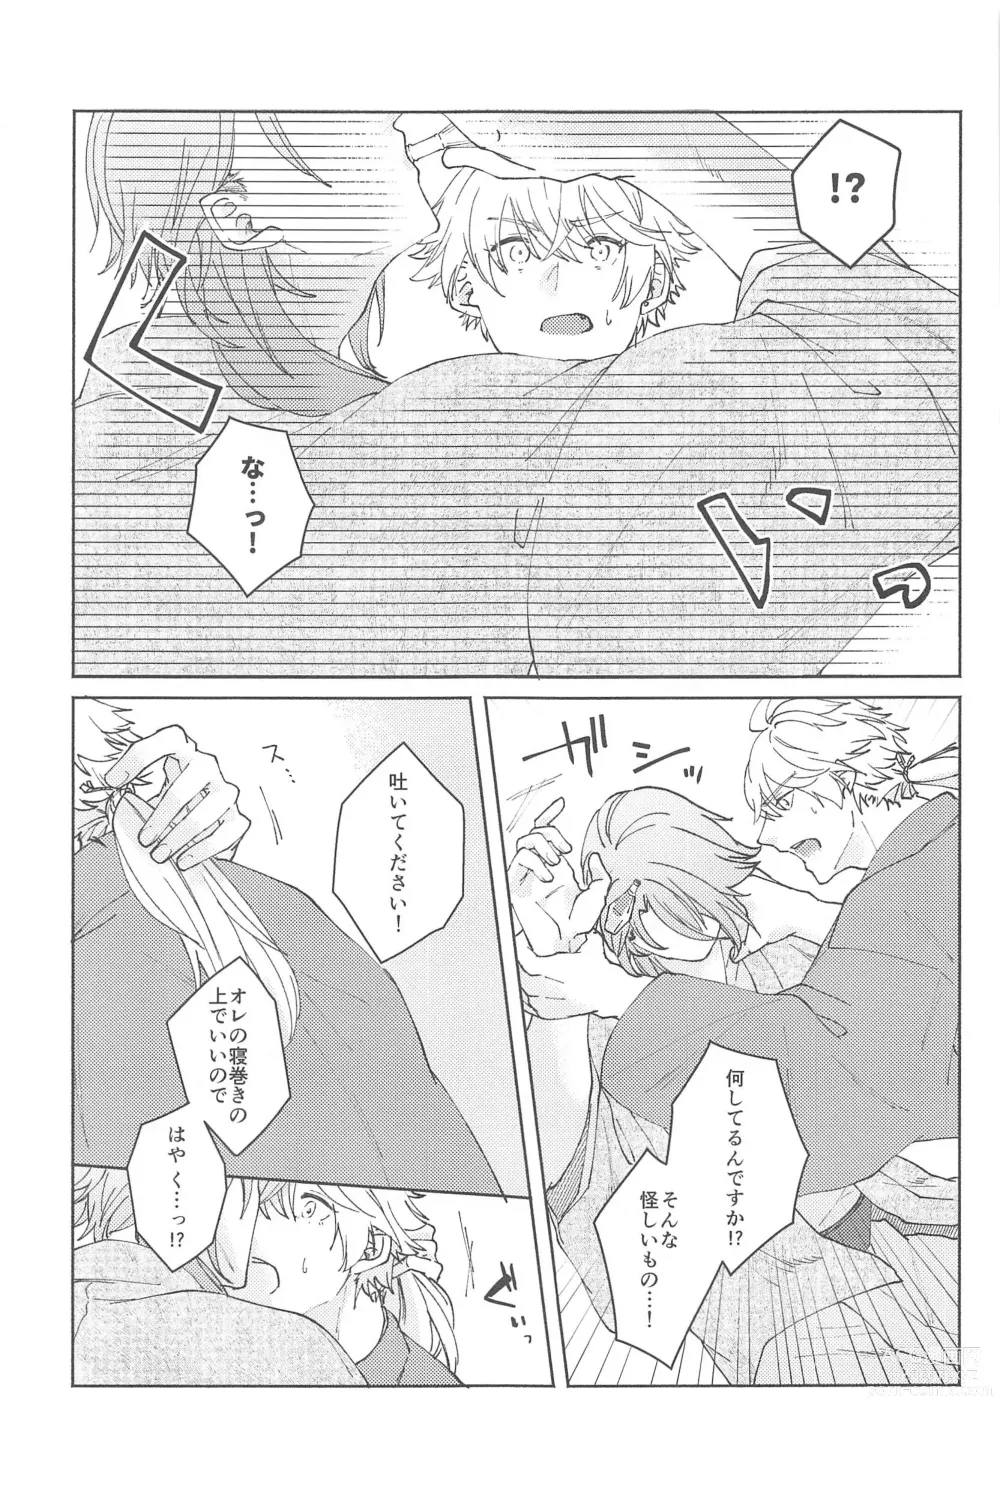 Page 36 of doujinshi Zenbu Kimi no Mono